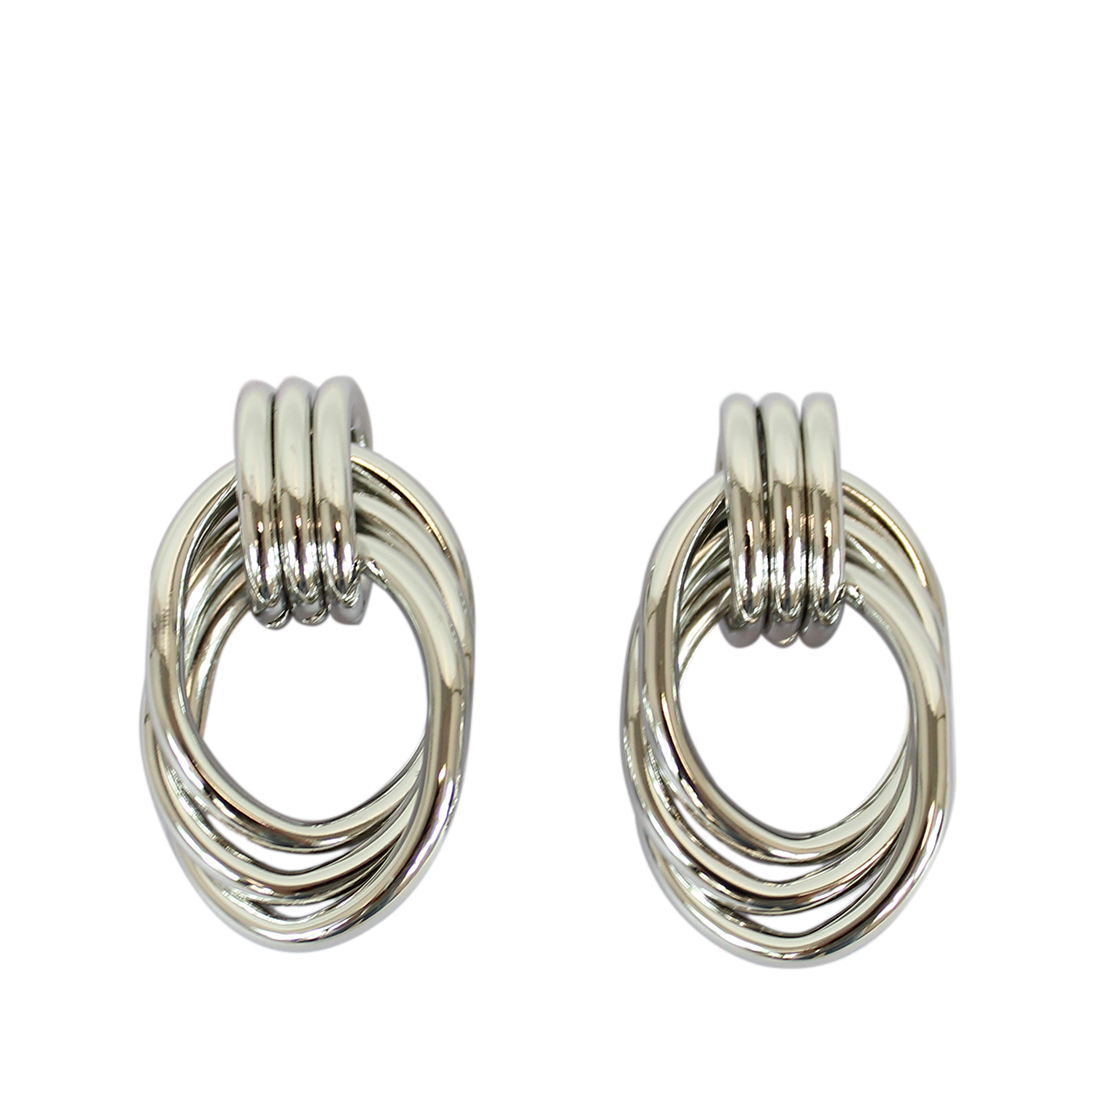 Medium knot design earrings